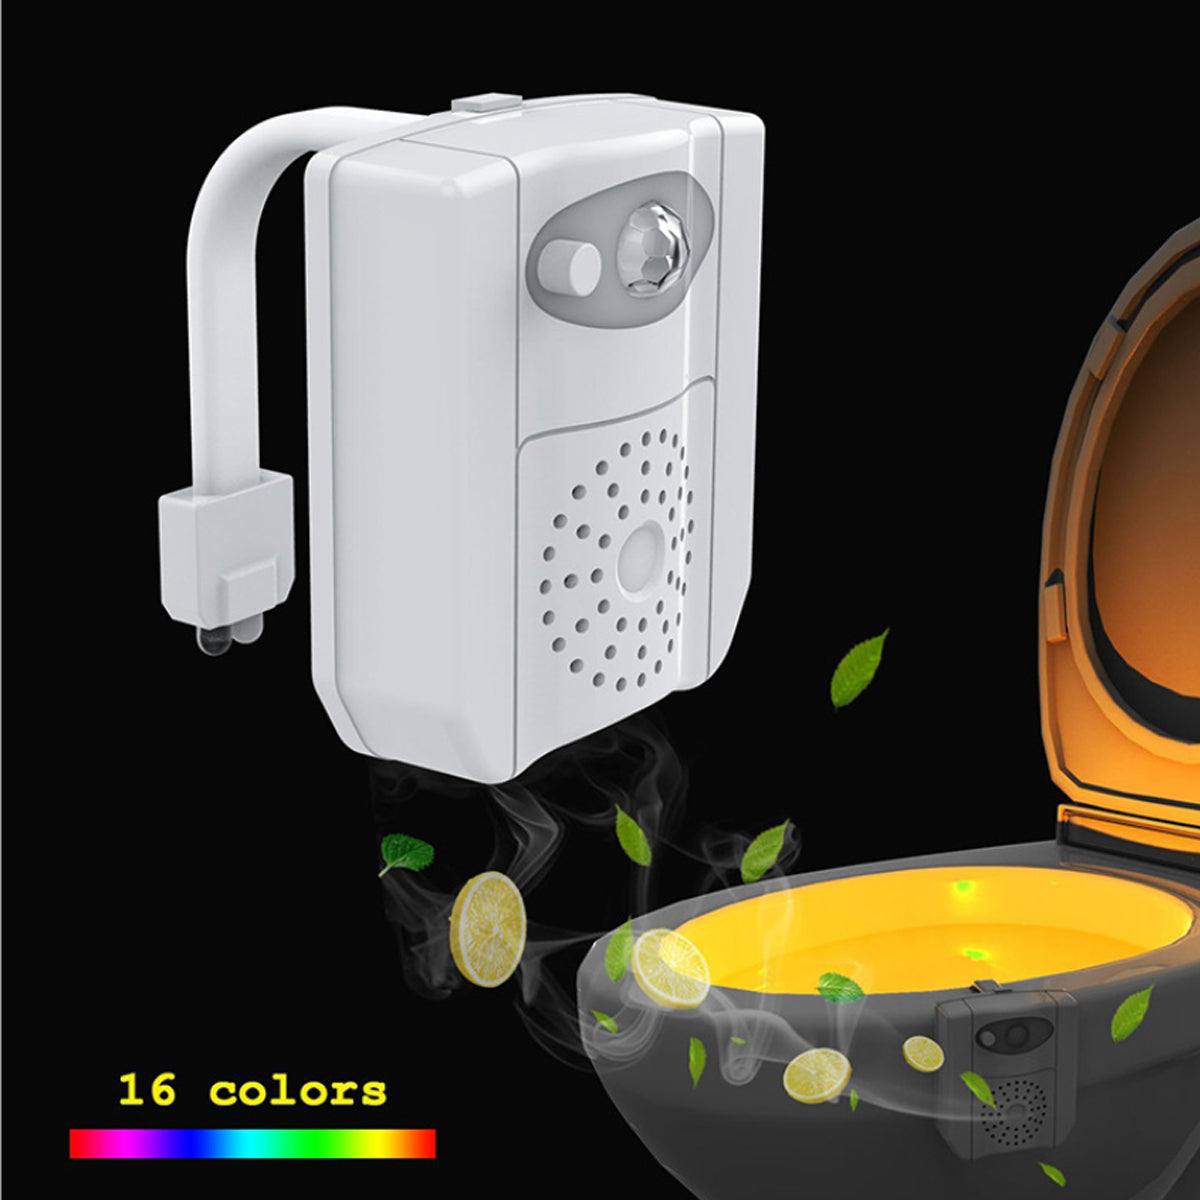  CLEAN BOWL UV Sanitizing Light For Germ Free Toilets With LED Motion Light by VistaShops VistaShops Perfumarie